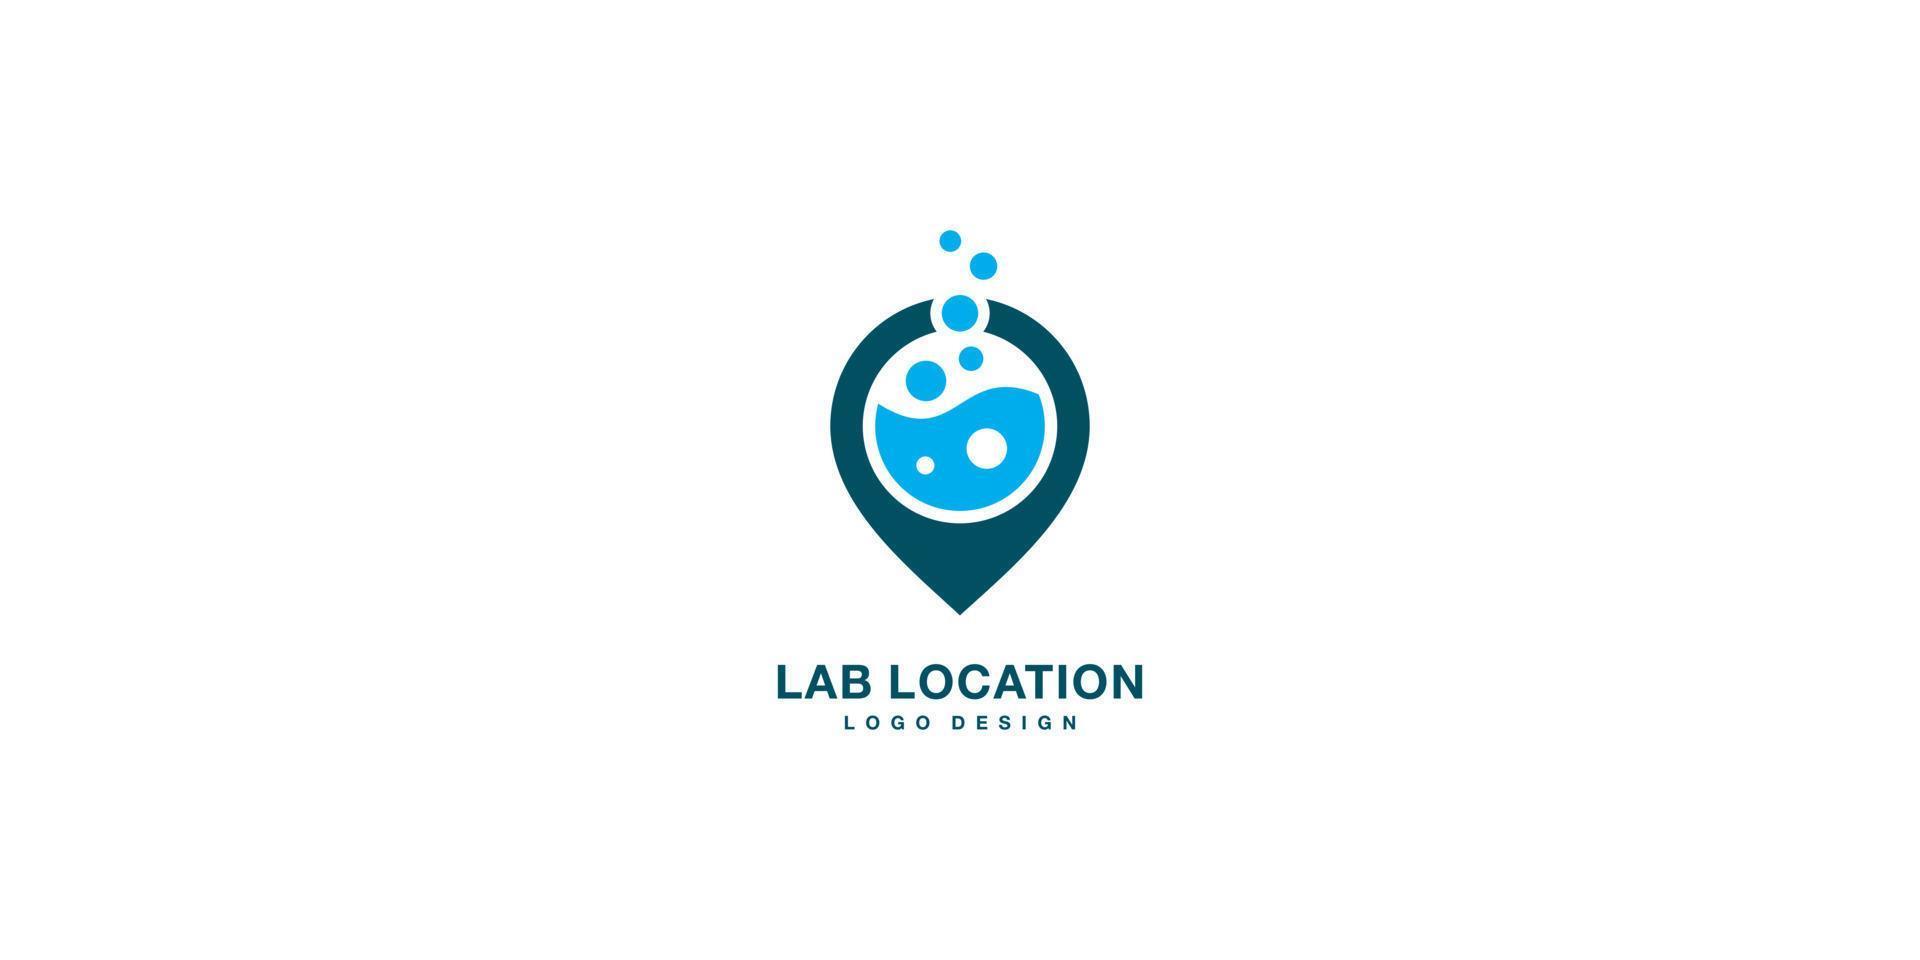 Logo-Vektordesign für den Laborstandort vektor